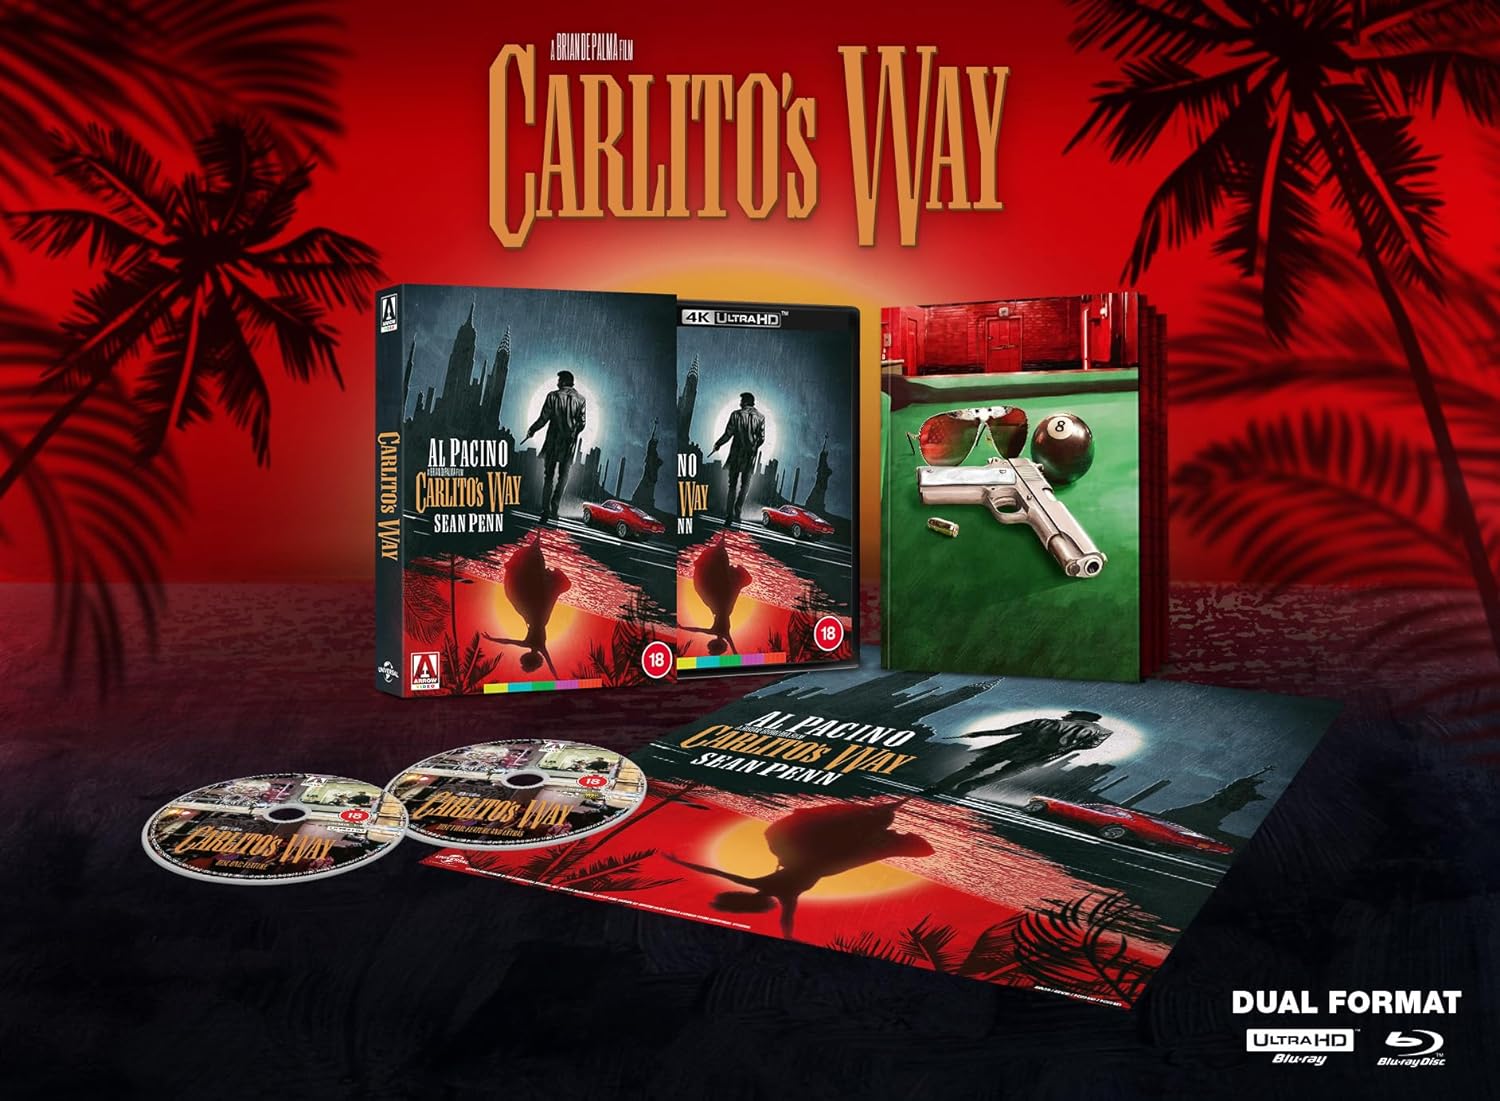 Carlito's Way (1993) 4k Blu-ray Limited Edition